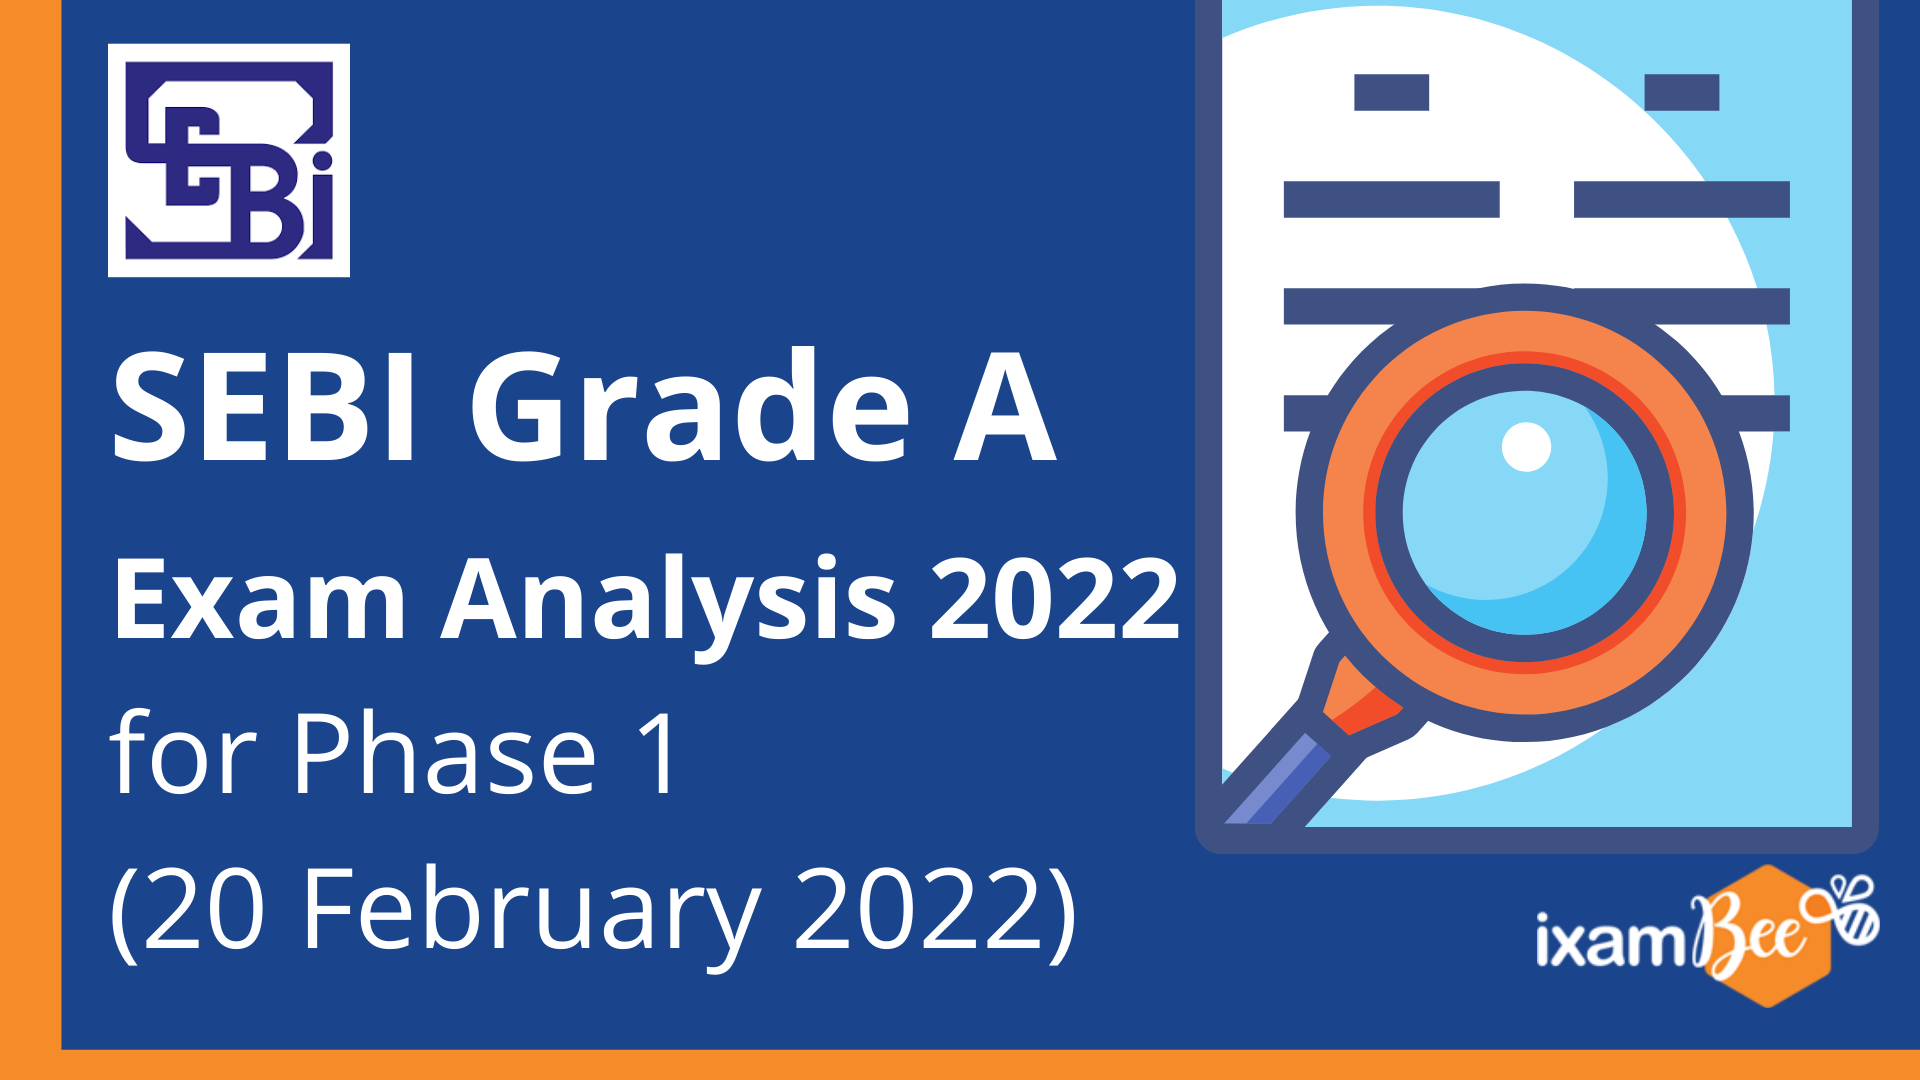 SEBI Grade A Exam Analysis 2022 Phase 1 (General): 20 February 2022